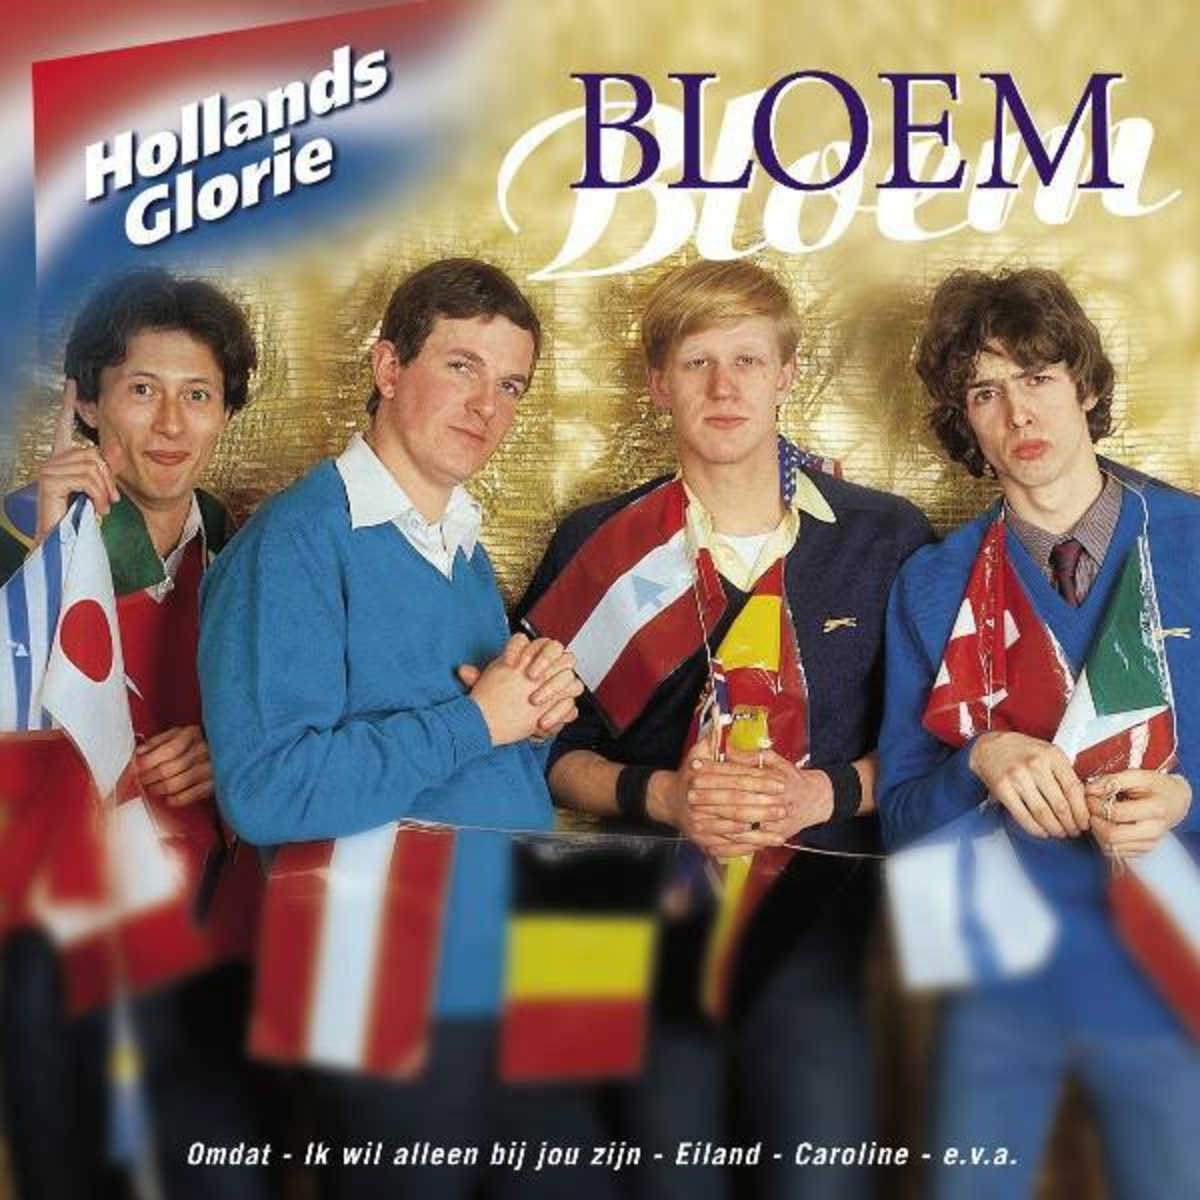 Hollands Glorie - Bloem (2006)